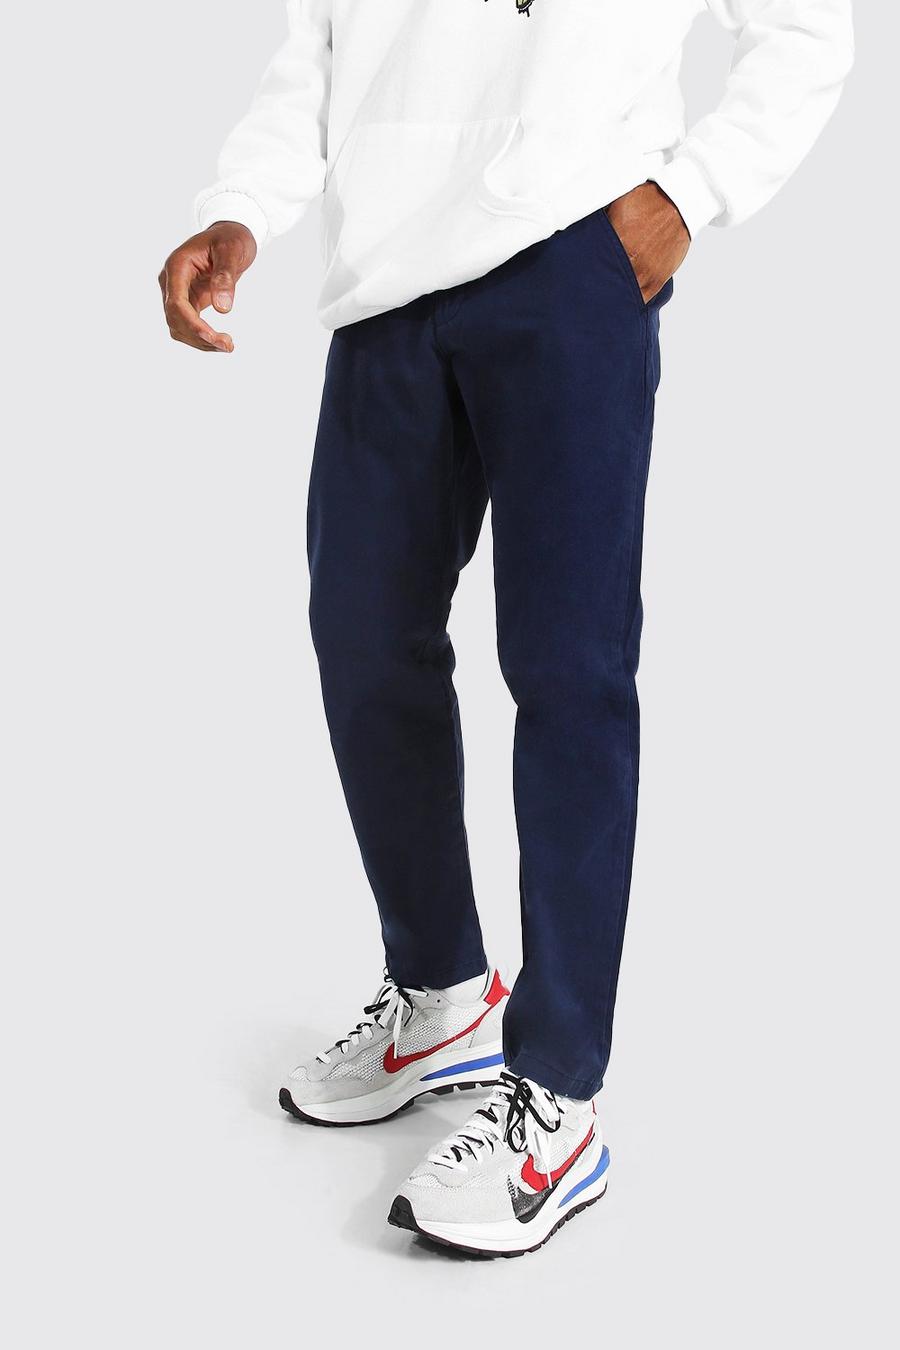 Pantaloni Chino Slim Fit, Navy azul marino